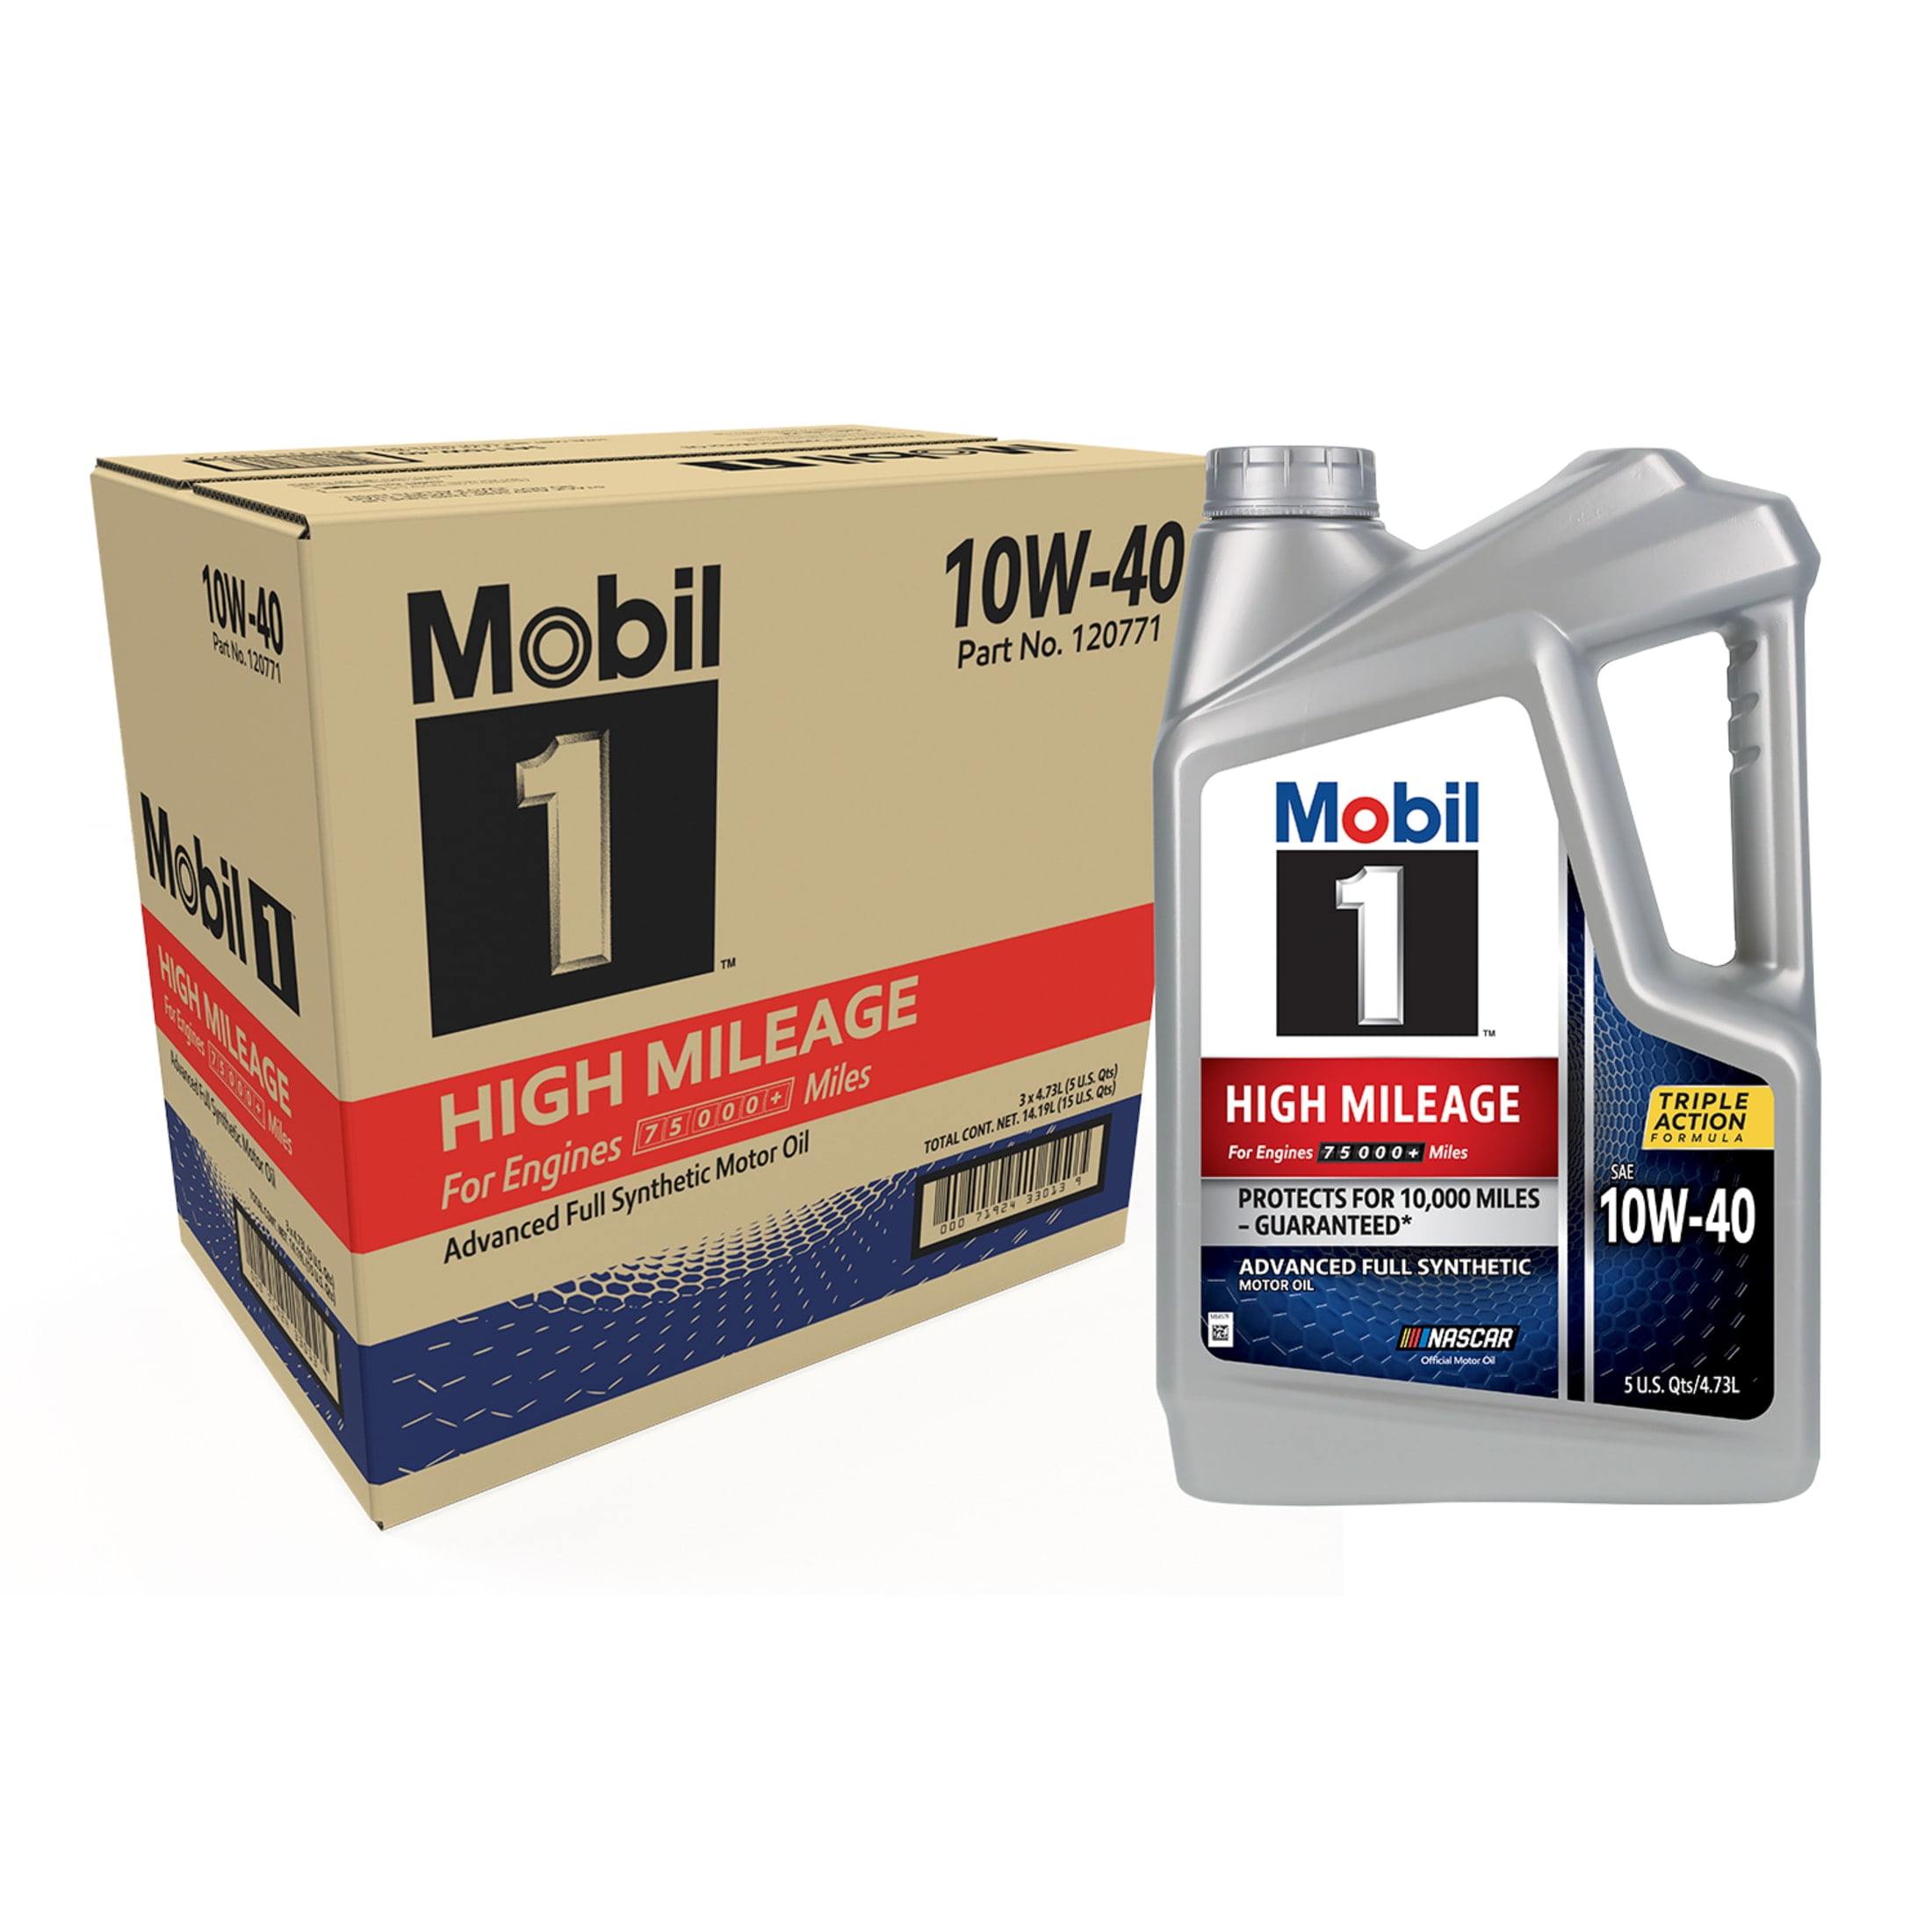 LIQUI MOLY 1L MoS2 Anti-Friction Motor Oil 10W-40